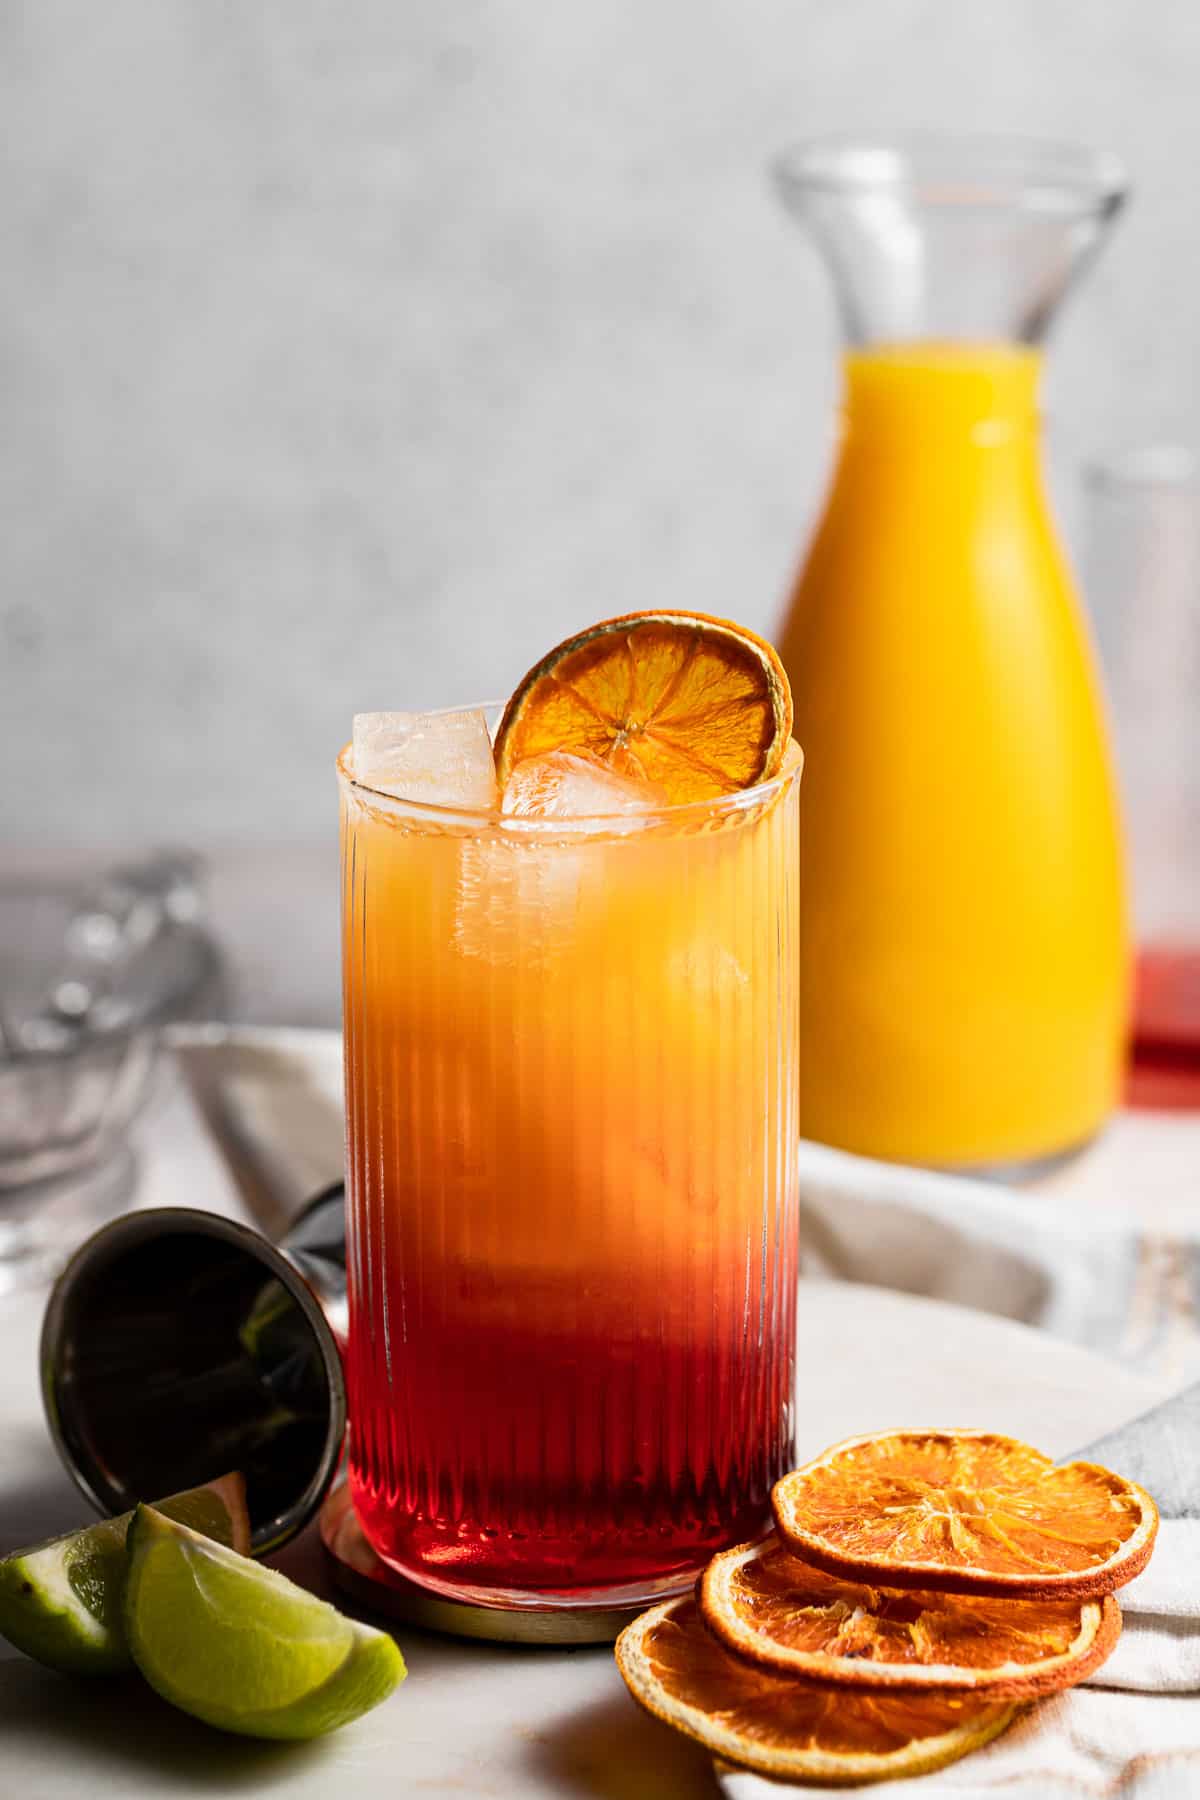 madras cocktail with orange juice